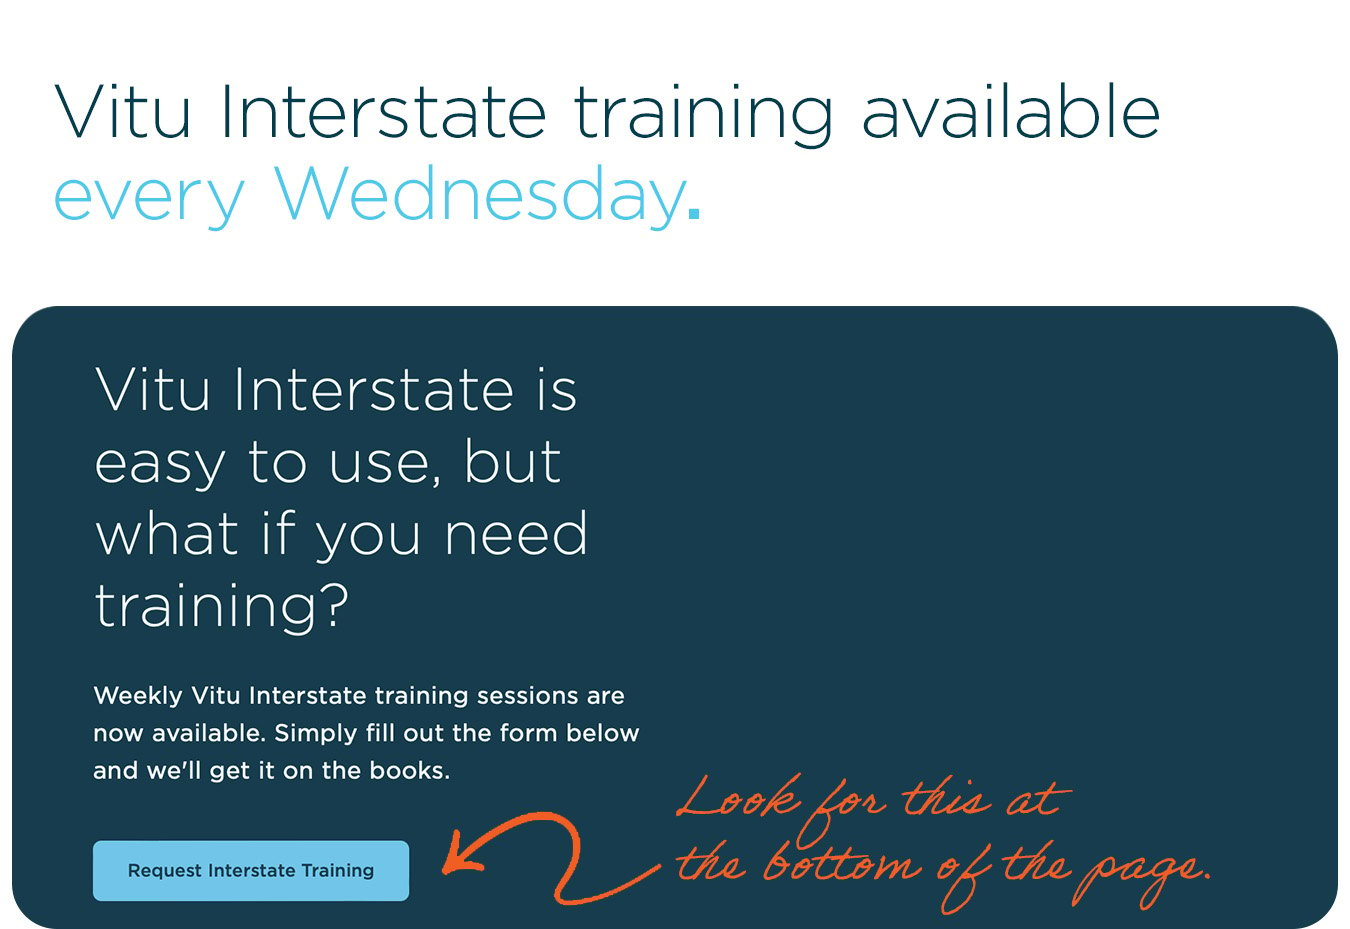 Vitu Interstate training available every Wednesday.